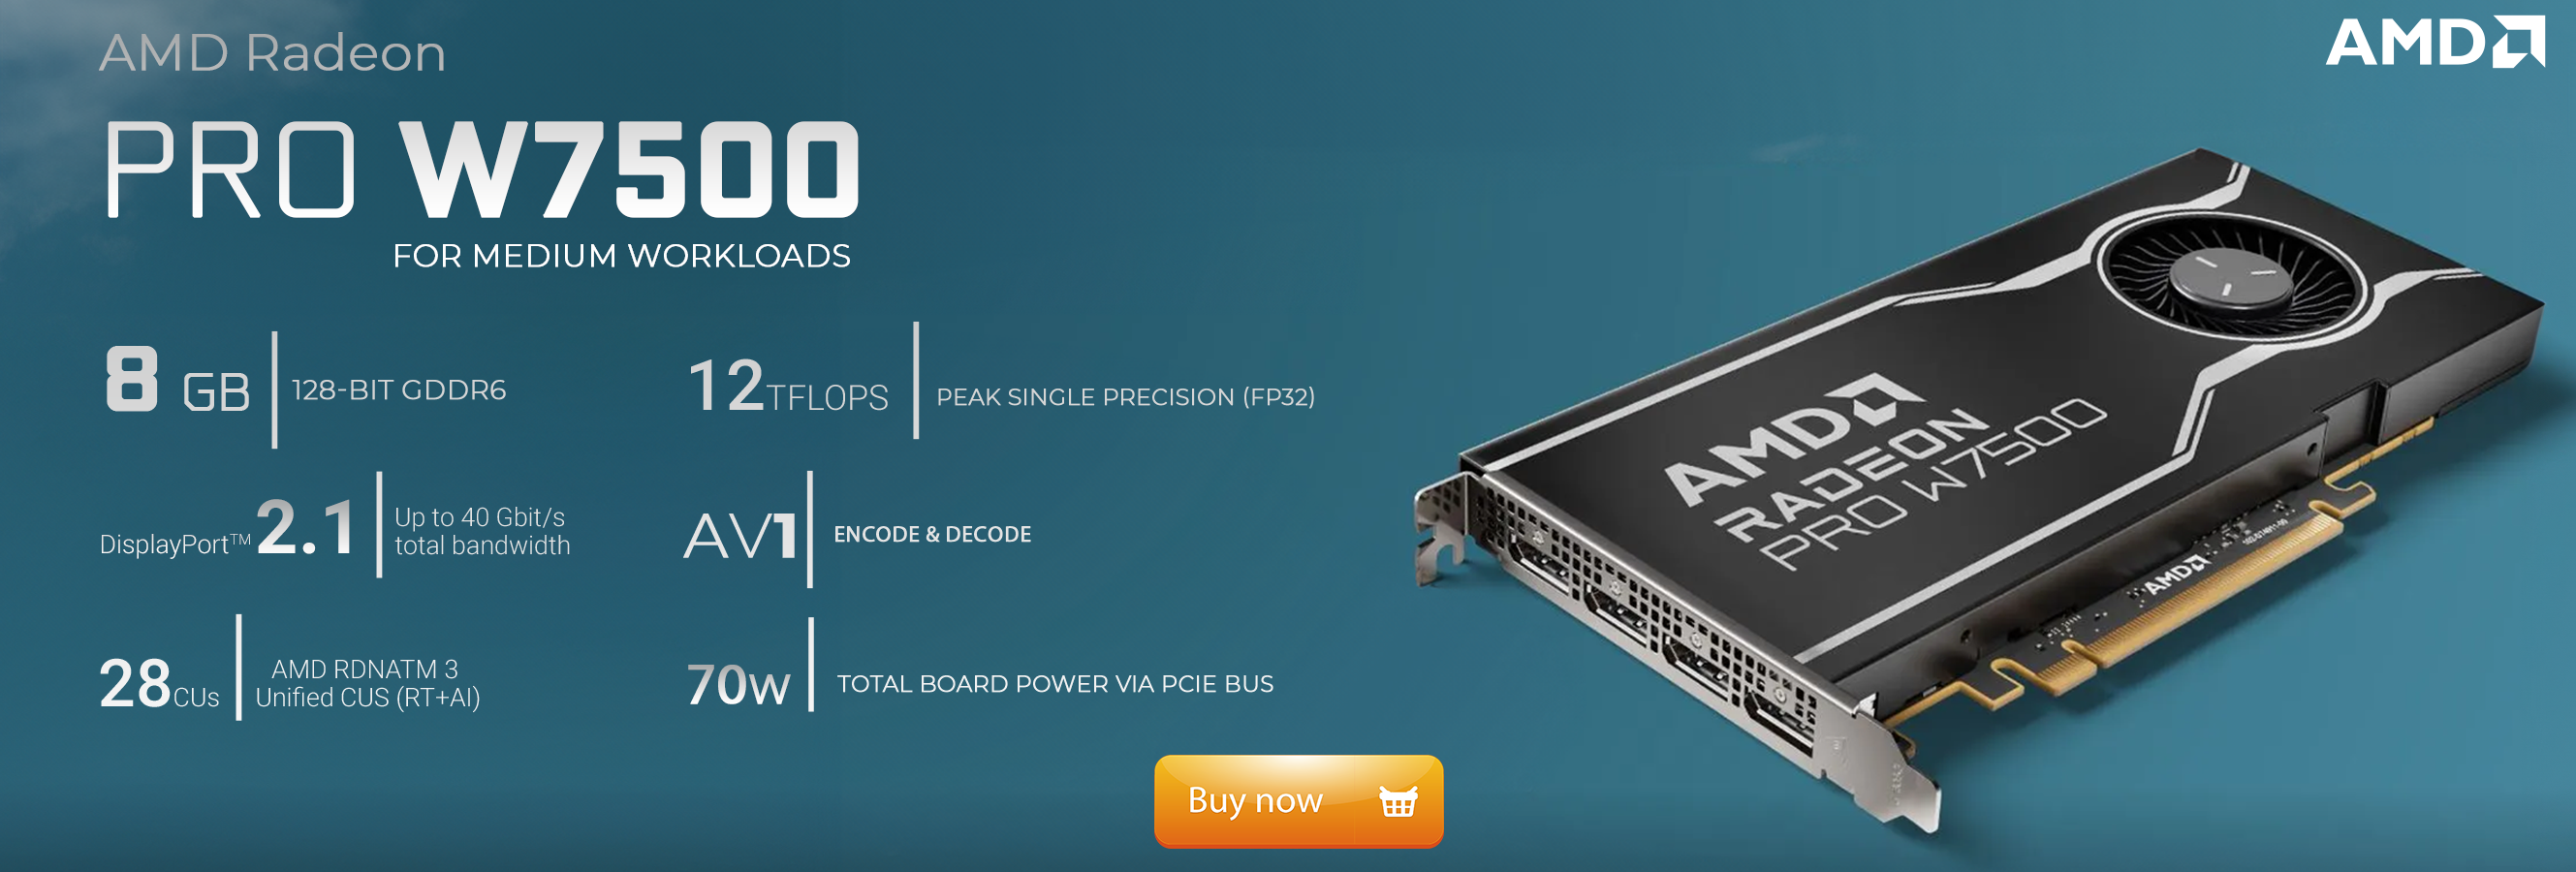 AMD Radeon PRO W7500 8GB GDDR6 Professional Graphics